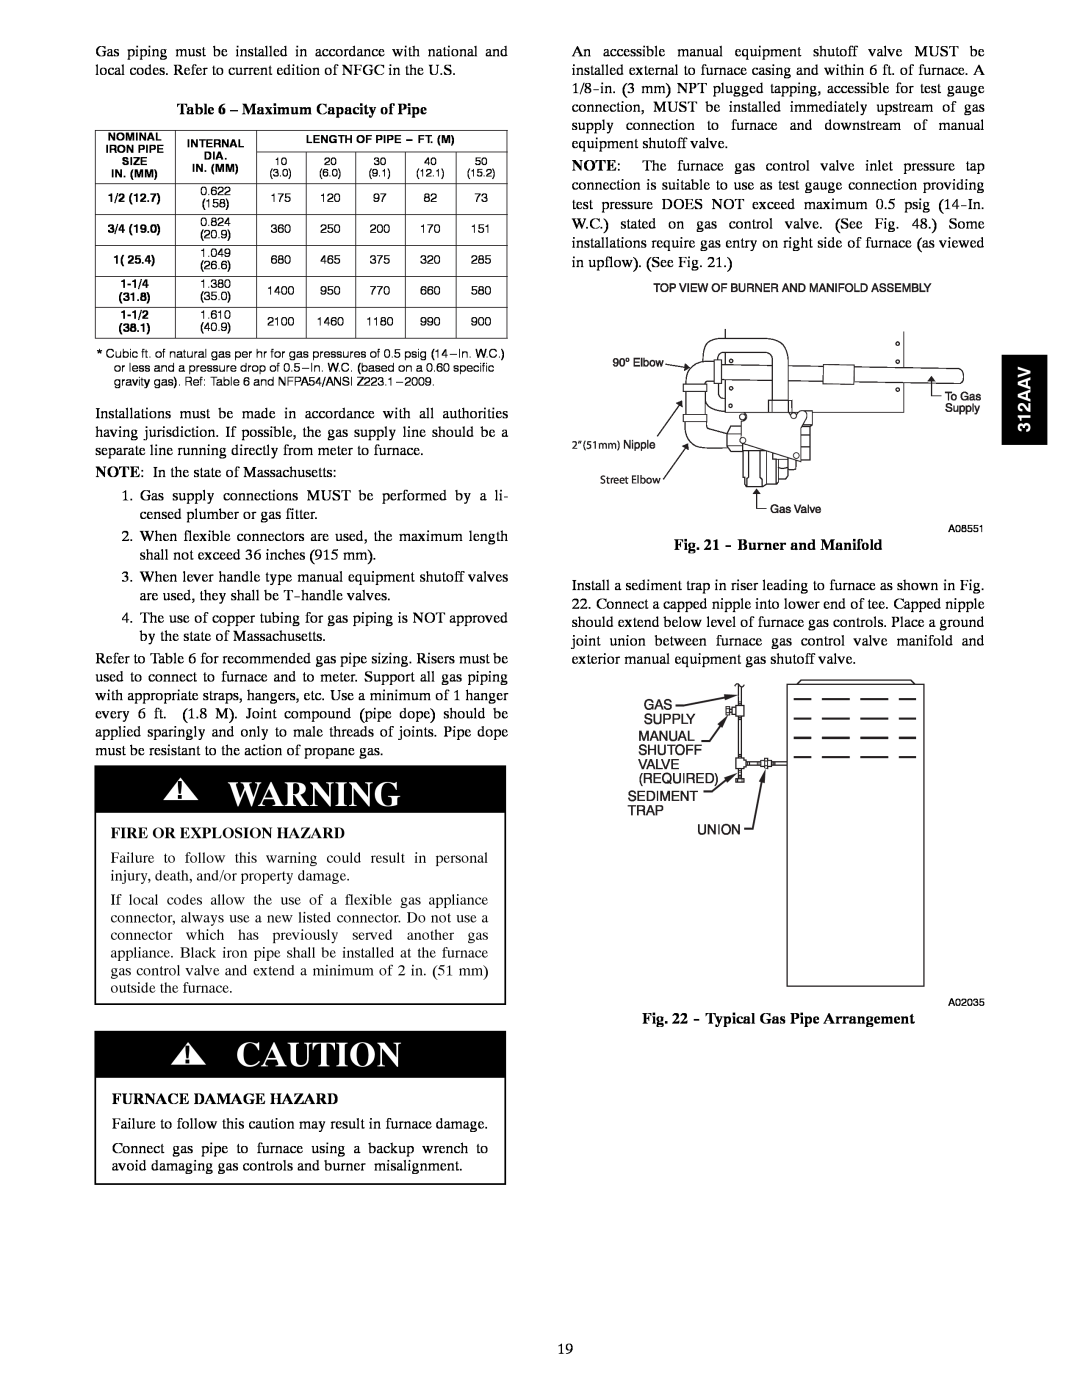 Bryant 312AAV/JAV Maximum Capacity of Pipe, Furnace Damage Hazard, Burner and Manifold, Typical Gas Pipe Arrangement 